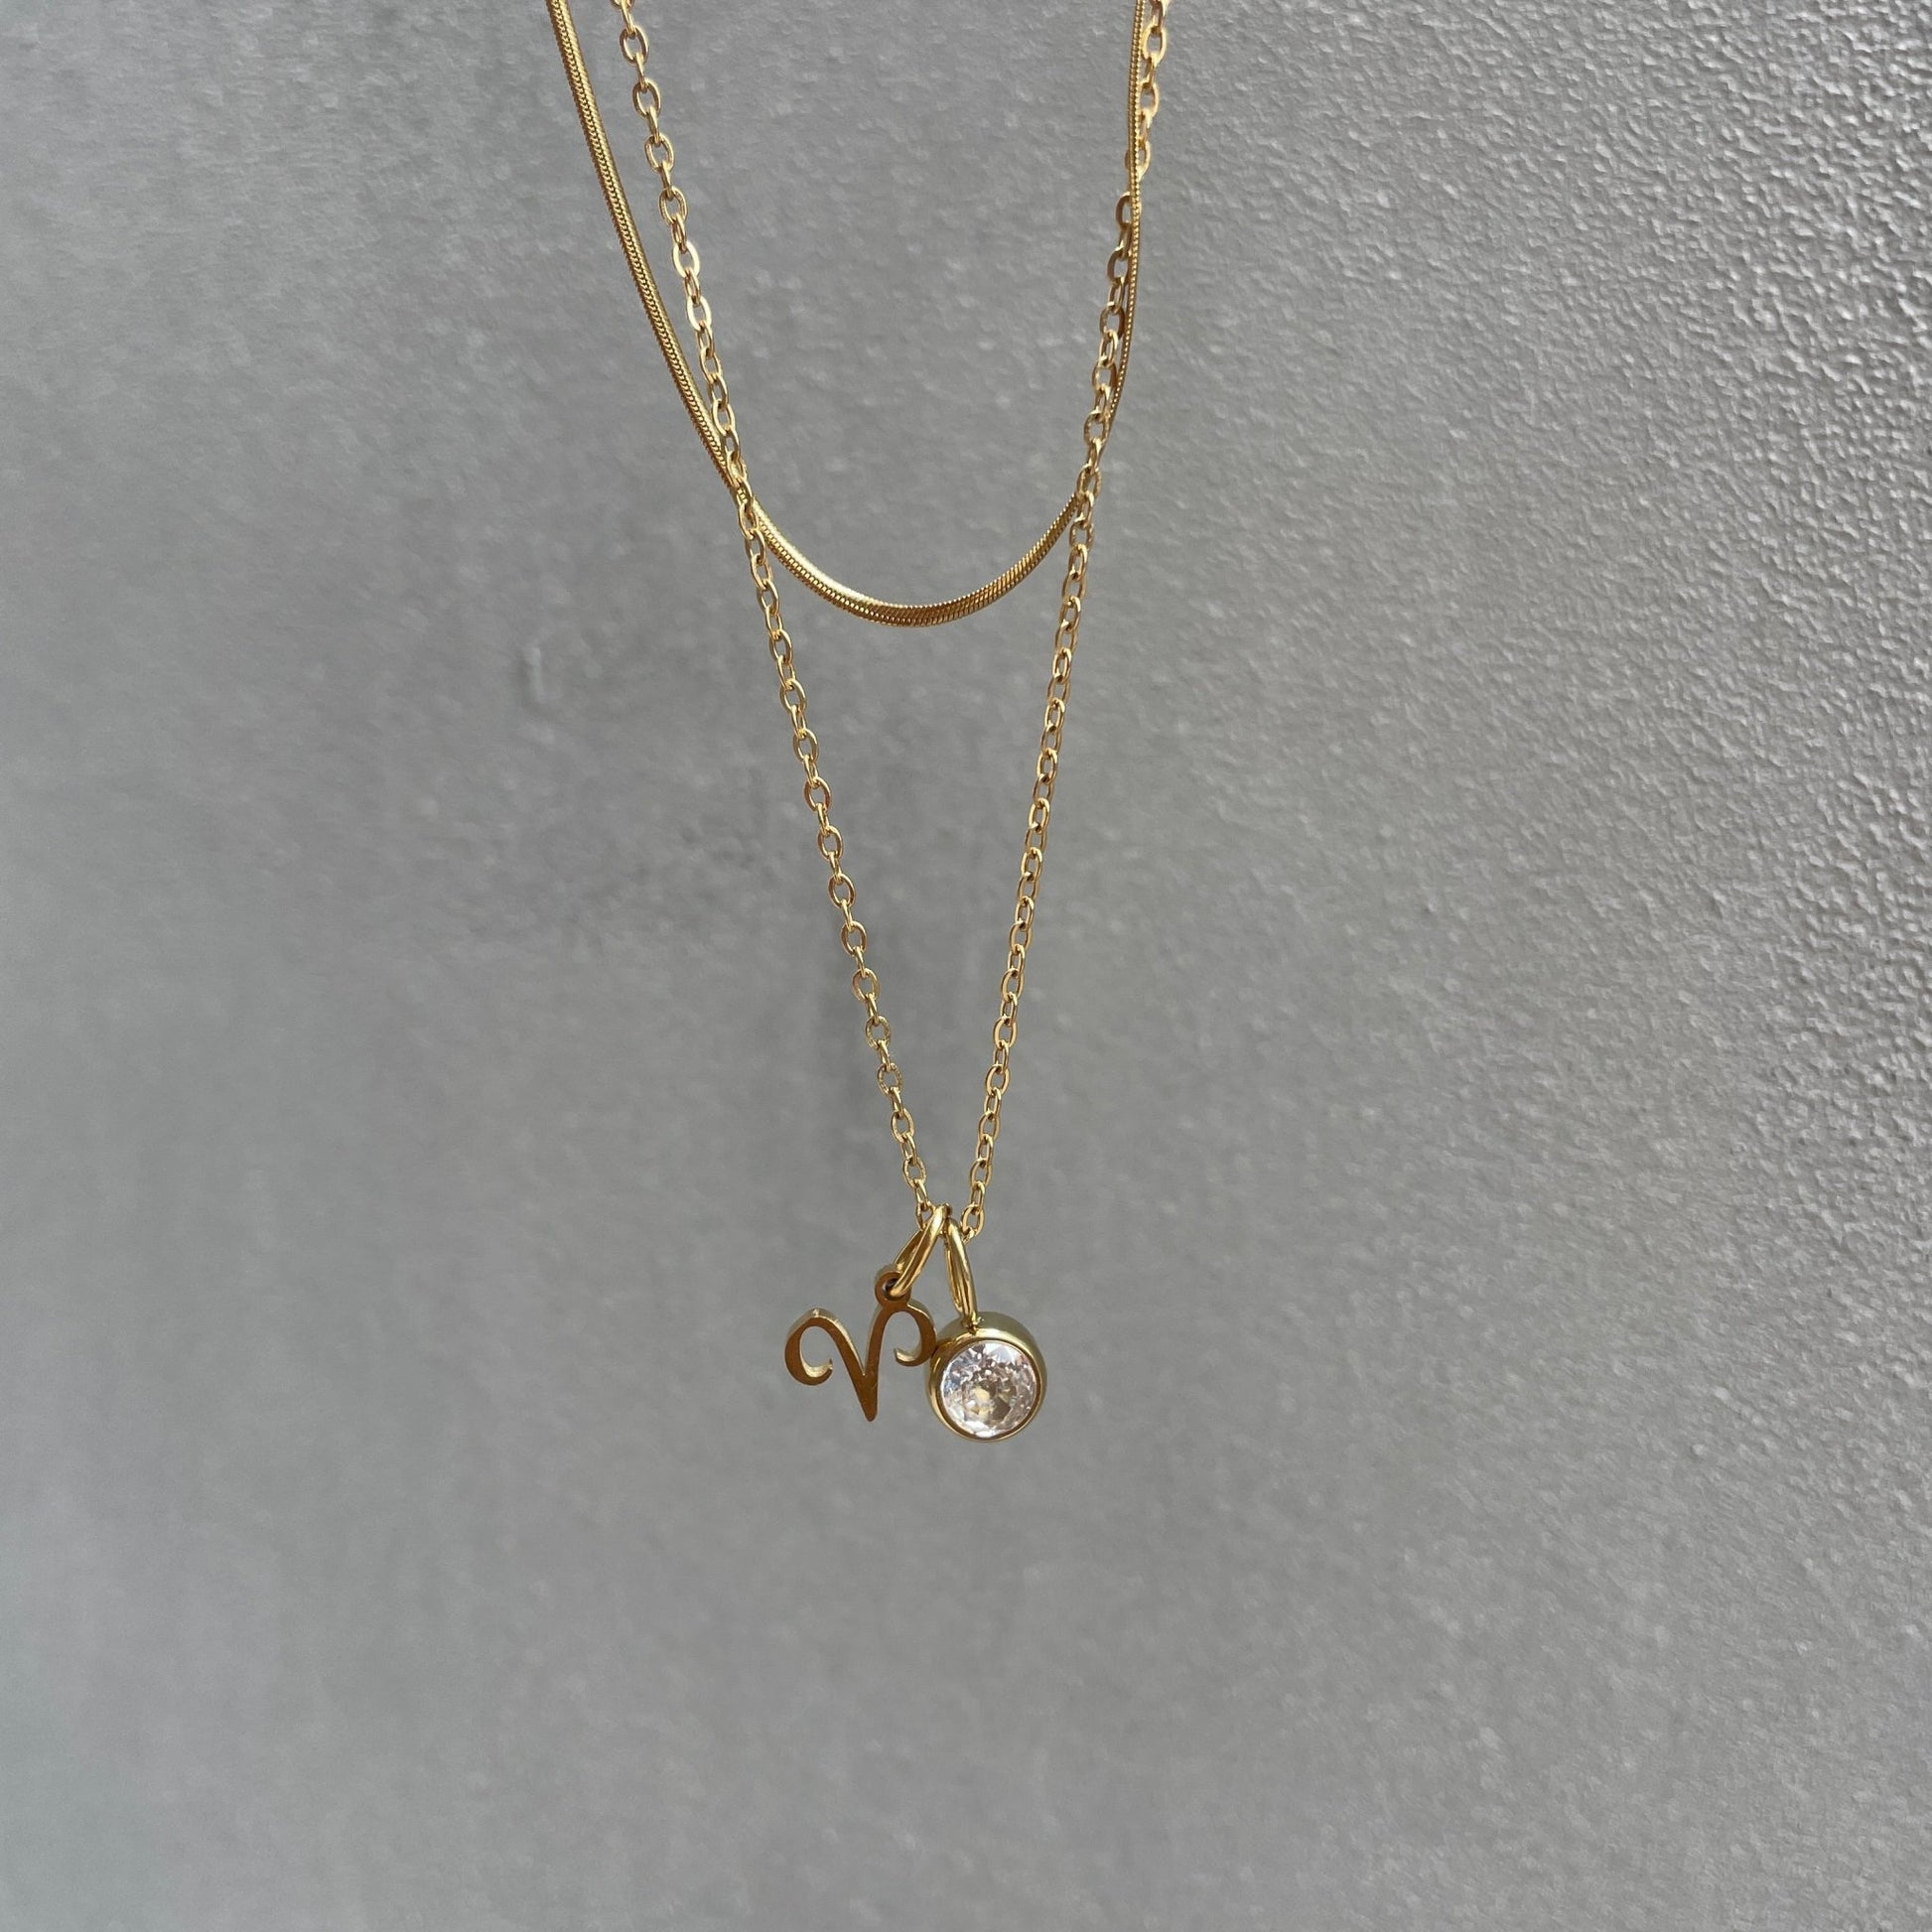 Custom necklace(誕生日石/星座) - 𝐇𝐨𝐧𝐞𝐲 𝐁𝐮𝐭𝐭𝐞𝐫 𝐍𝐢𝐧𝐞